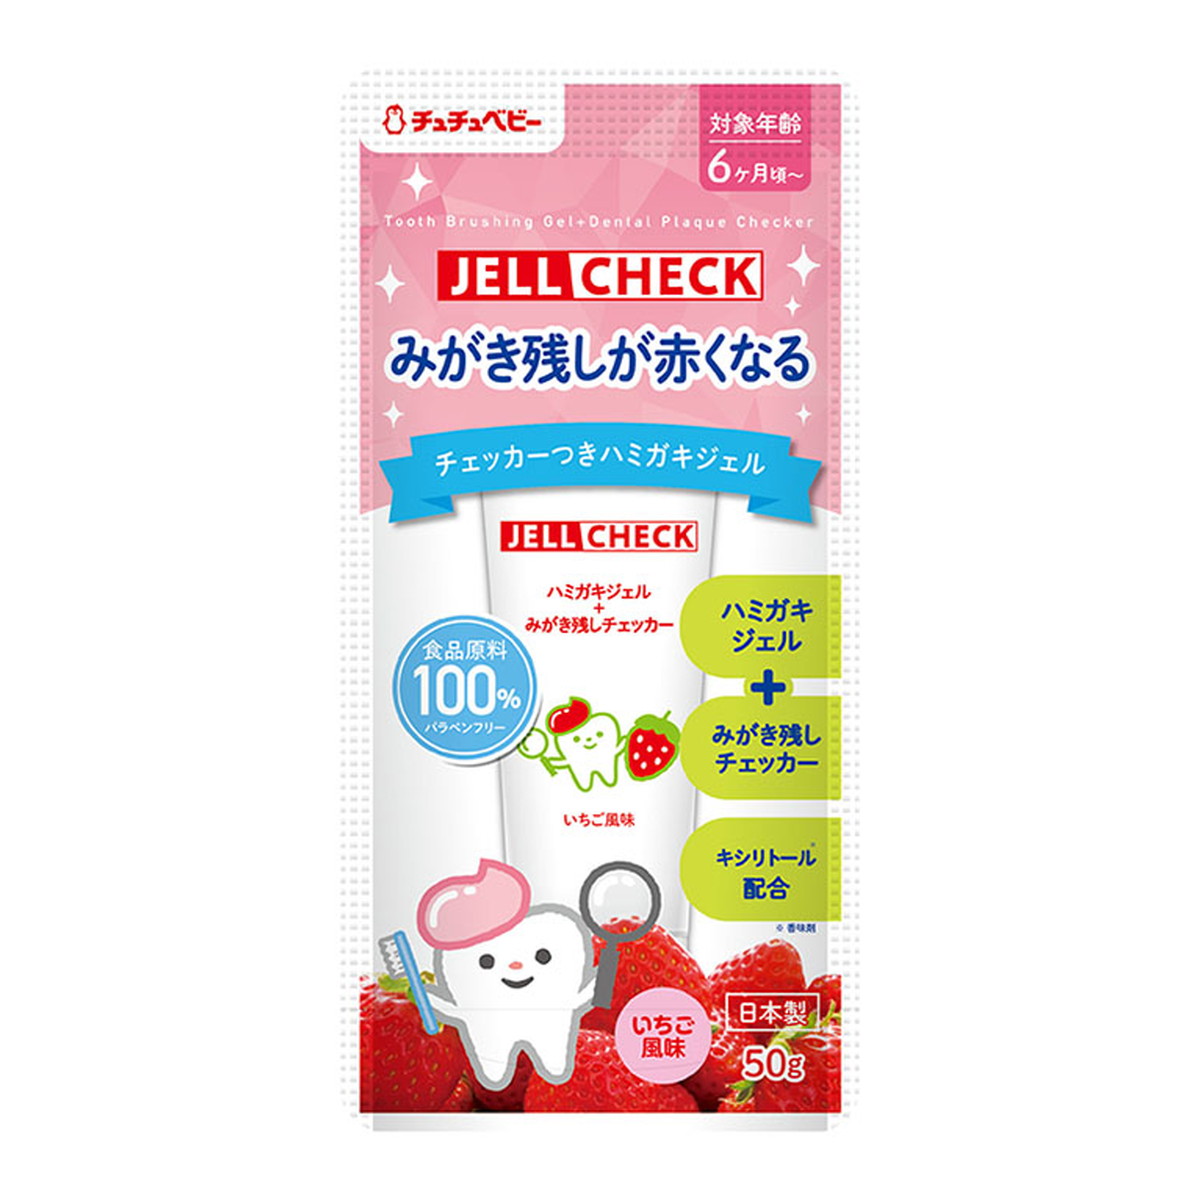  cat pohs free shipping chuchu baby gel check strawberry taste 50g